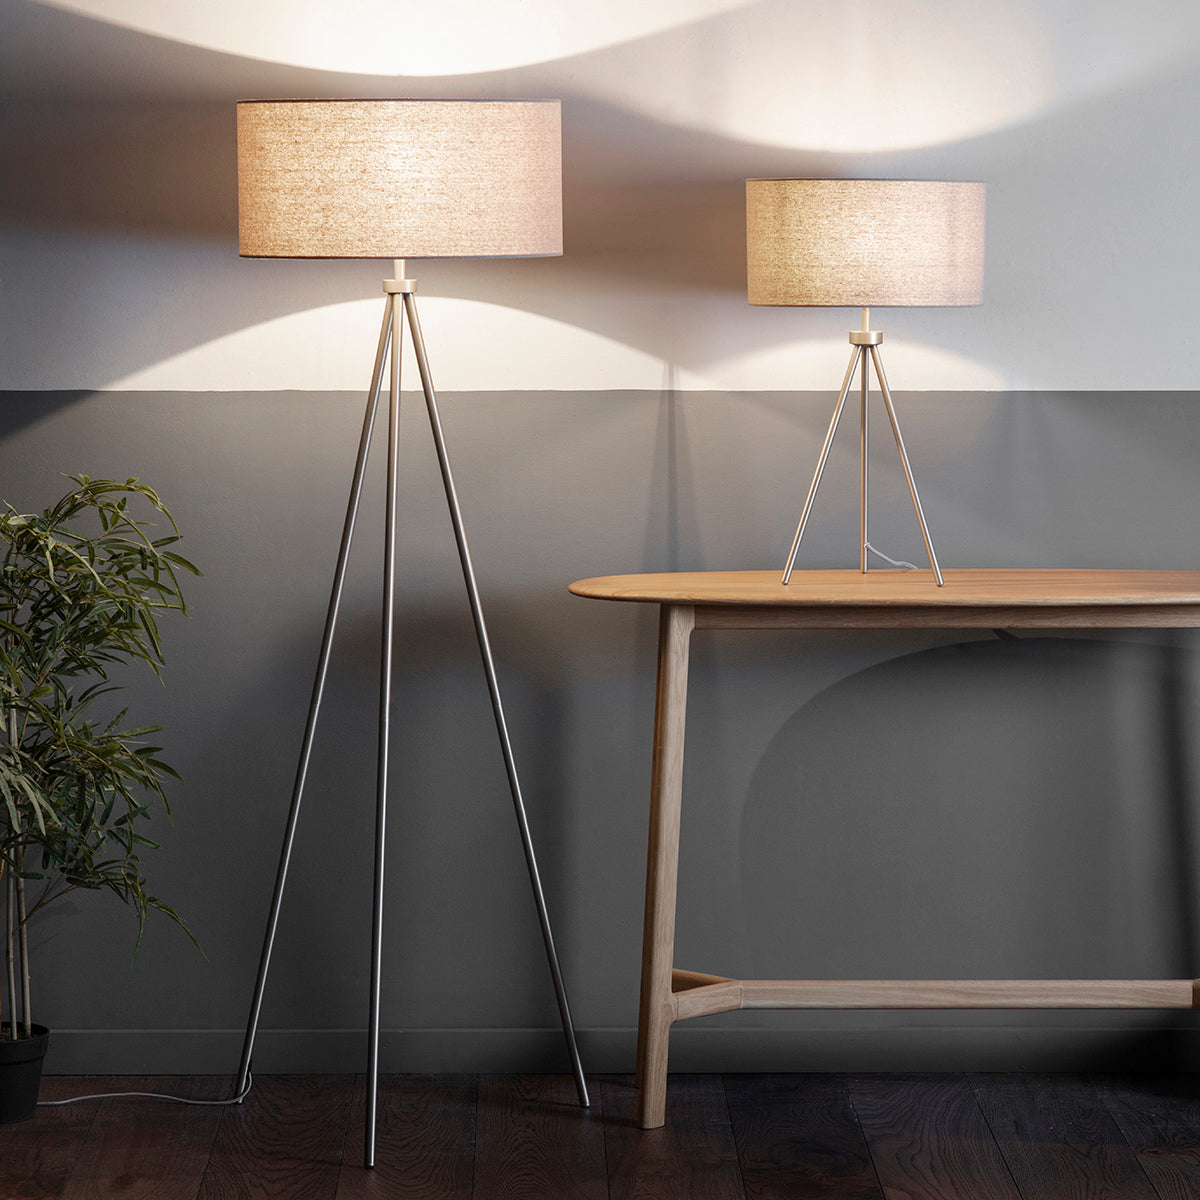 Two Kikiathome.co.uk Tri Floor Lamps enhancing home interior decor.